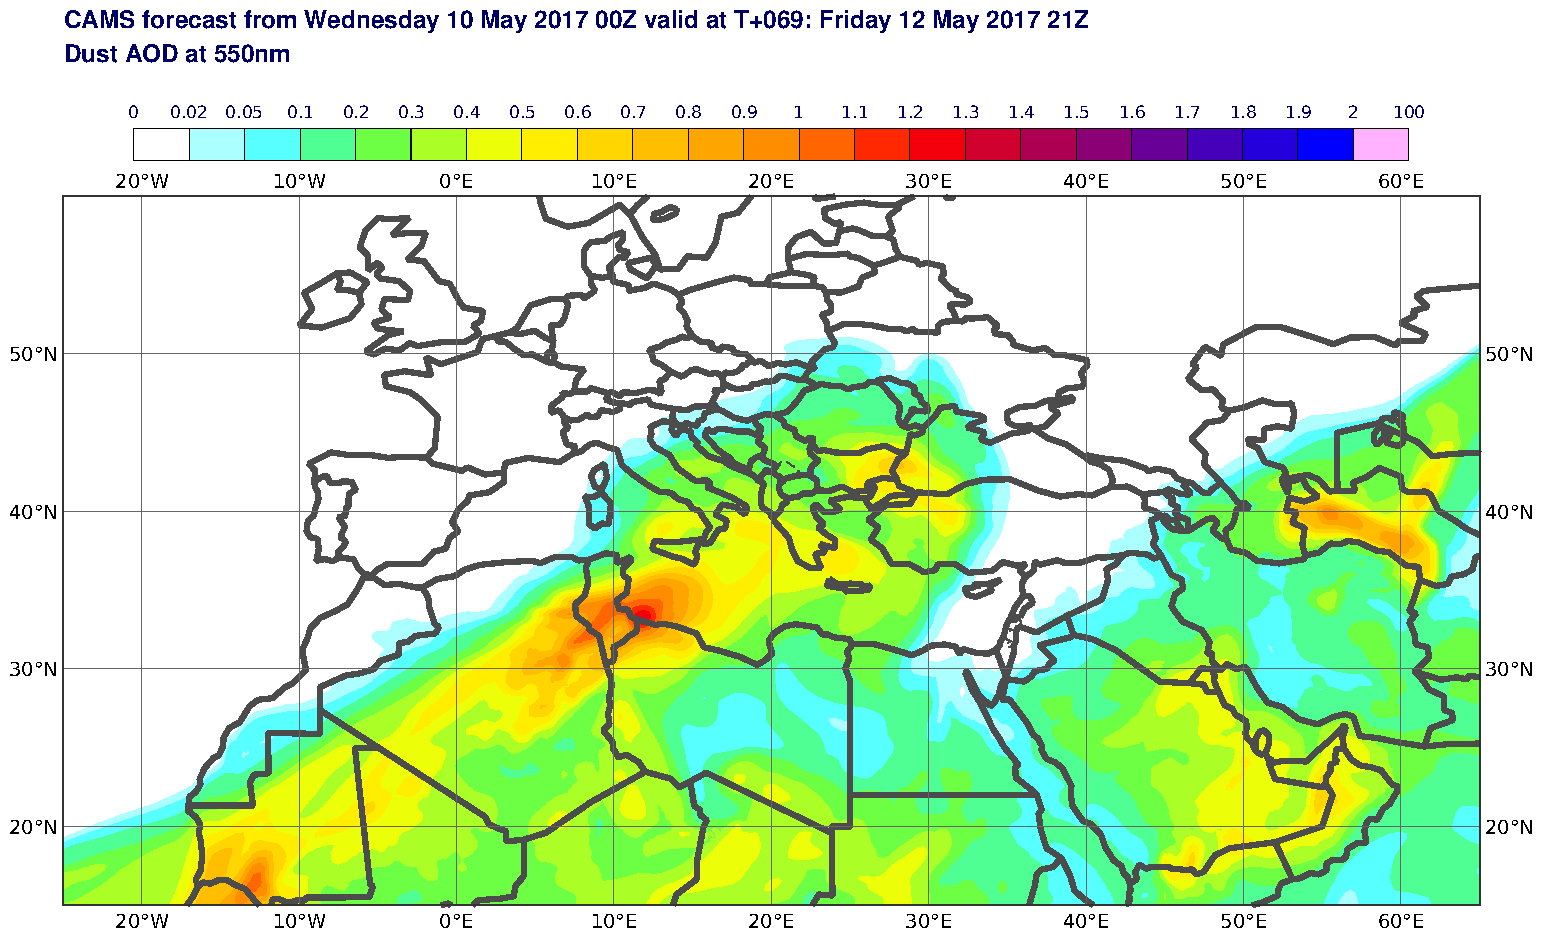 Dust AOD at 550nm valid at T69 - 2017-05-12 21:00